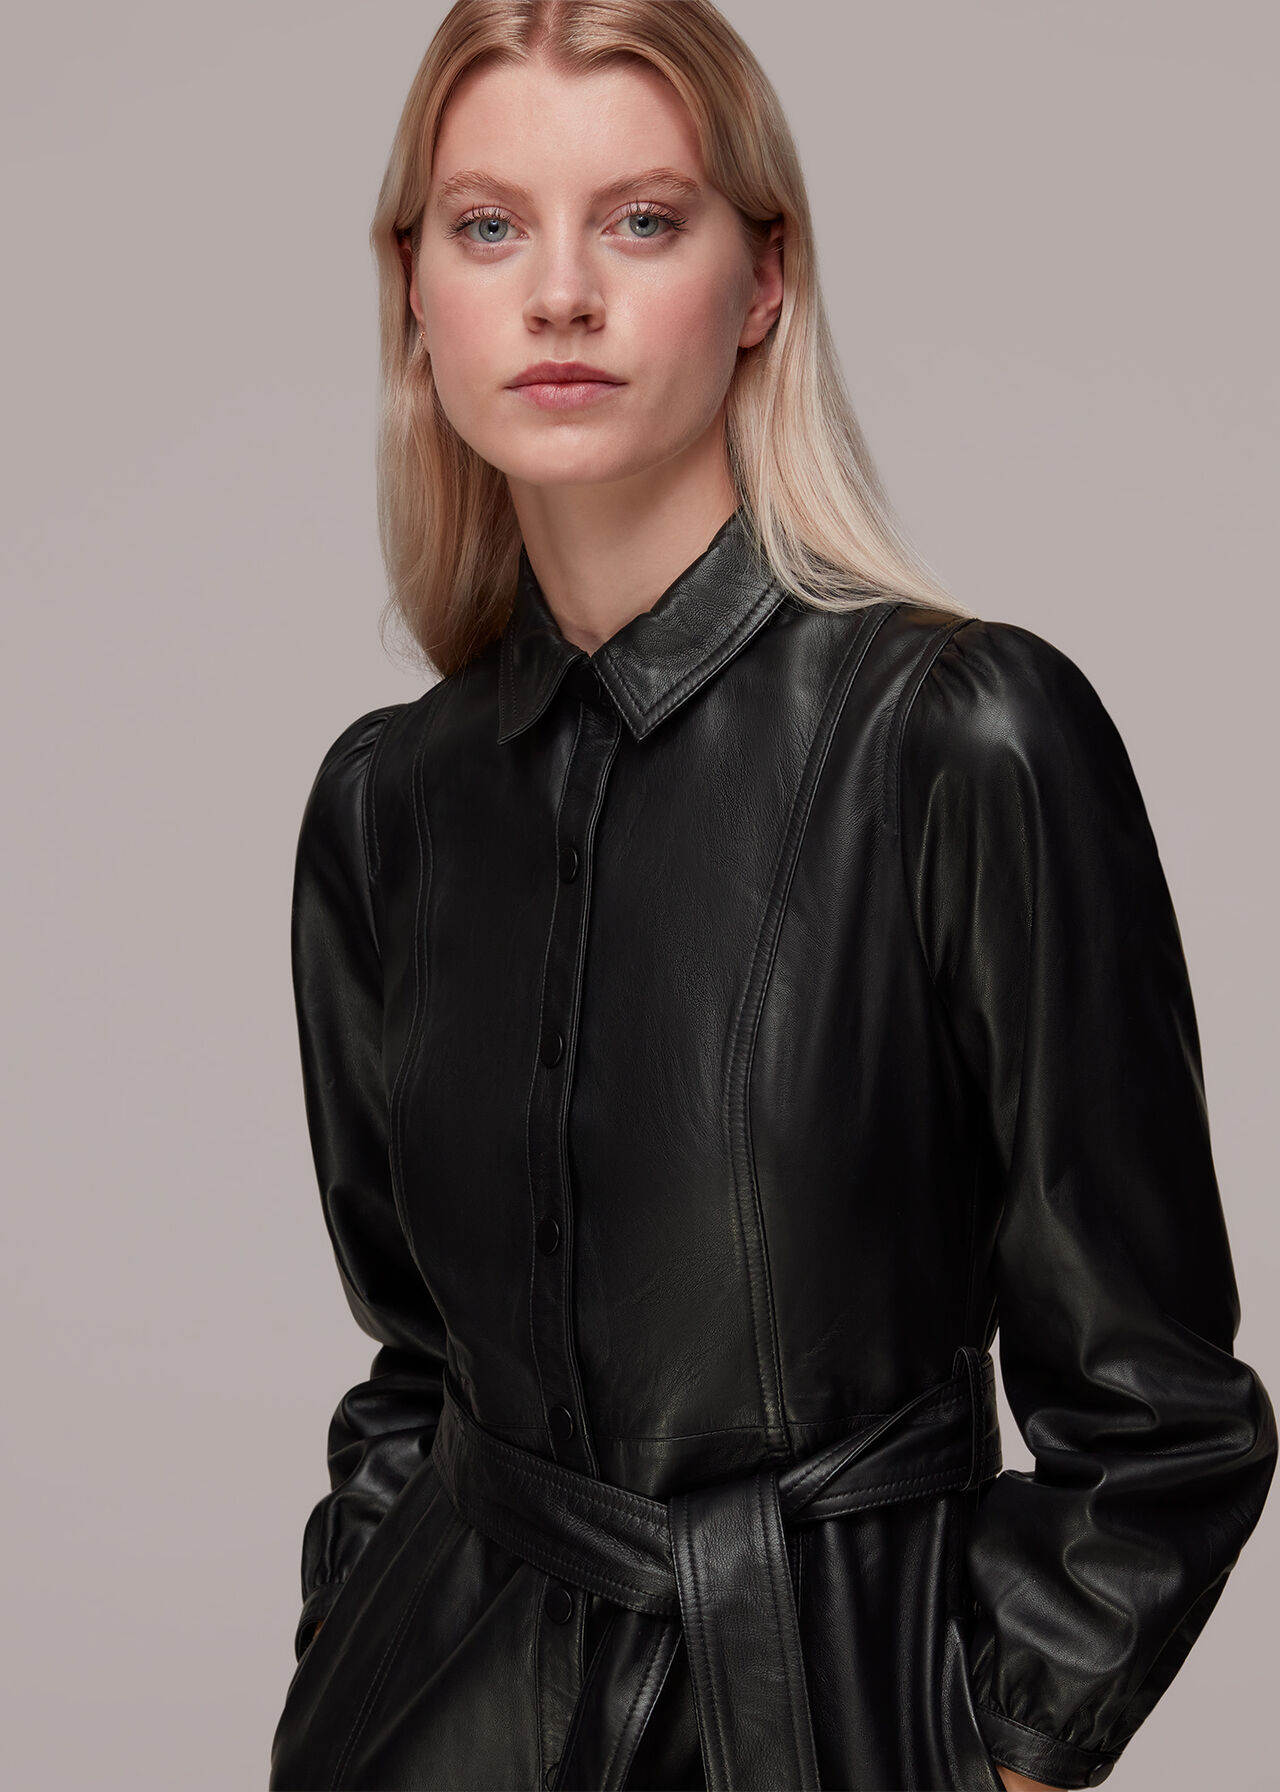 short black leather dress